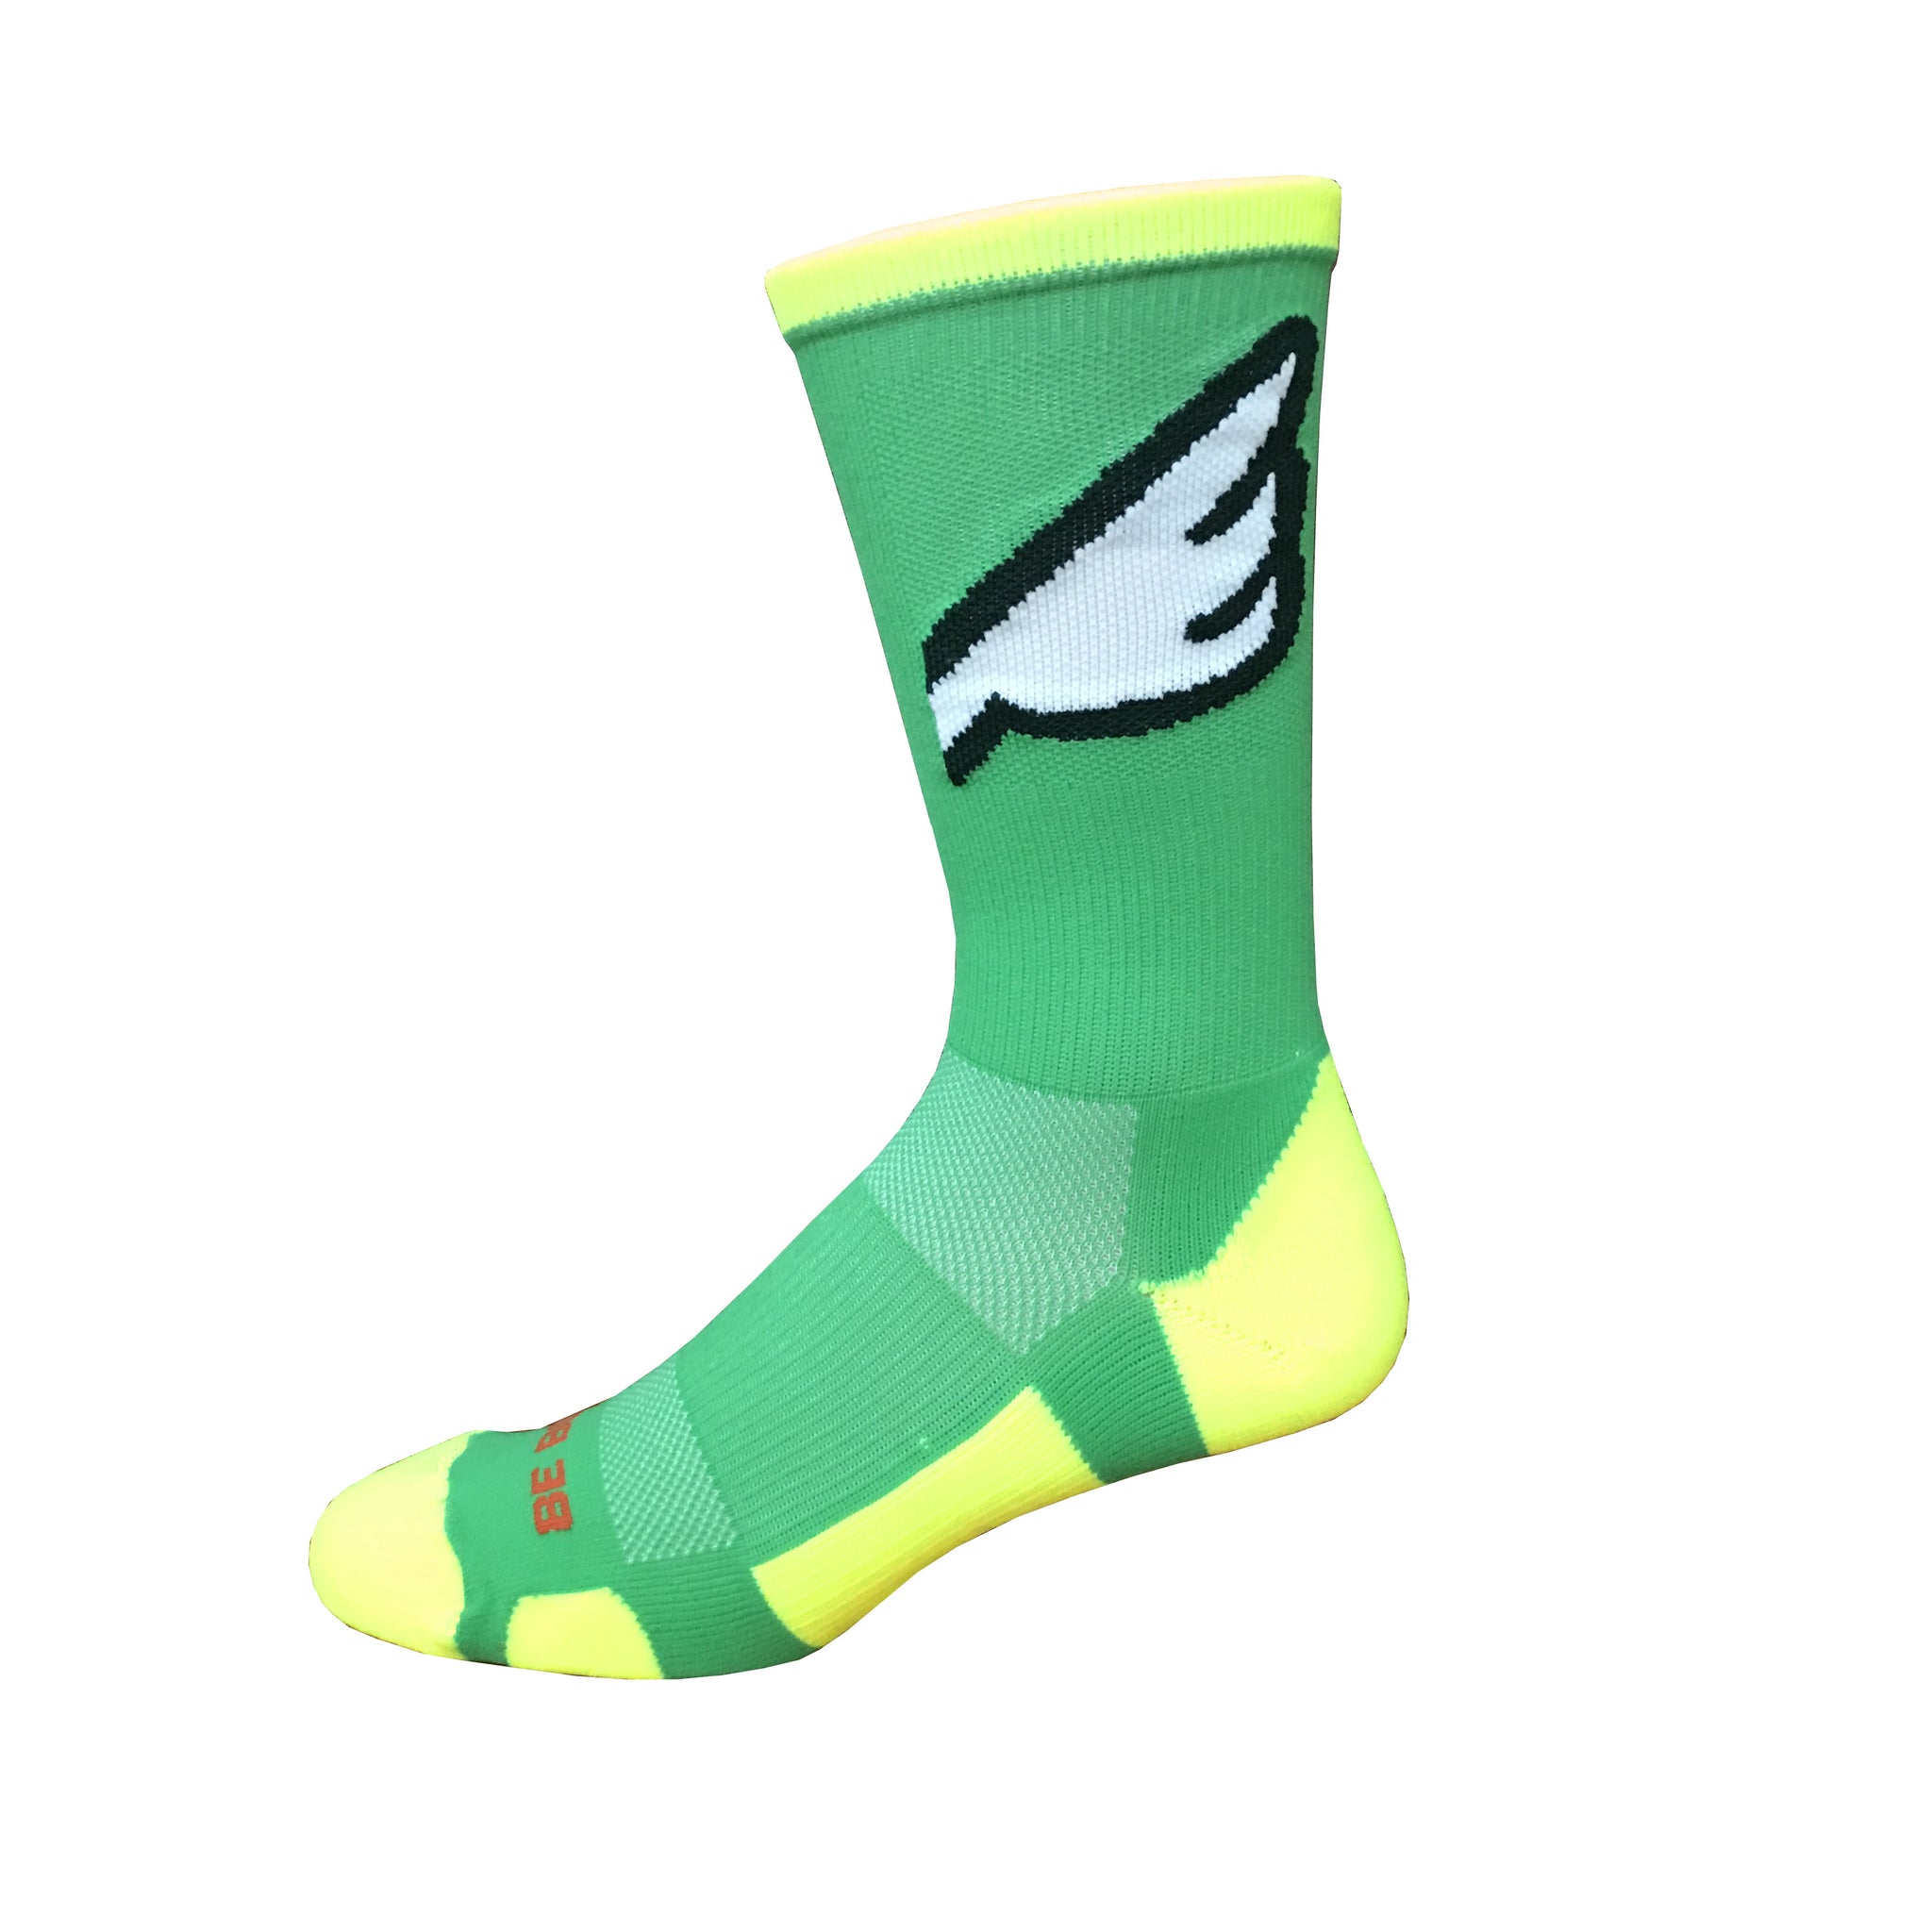 neon athletic socks